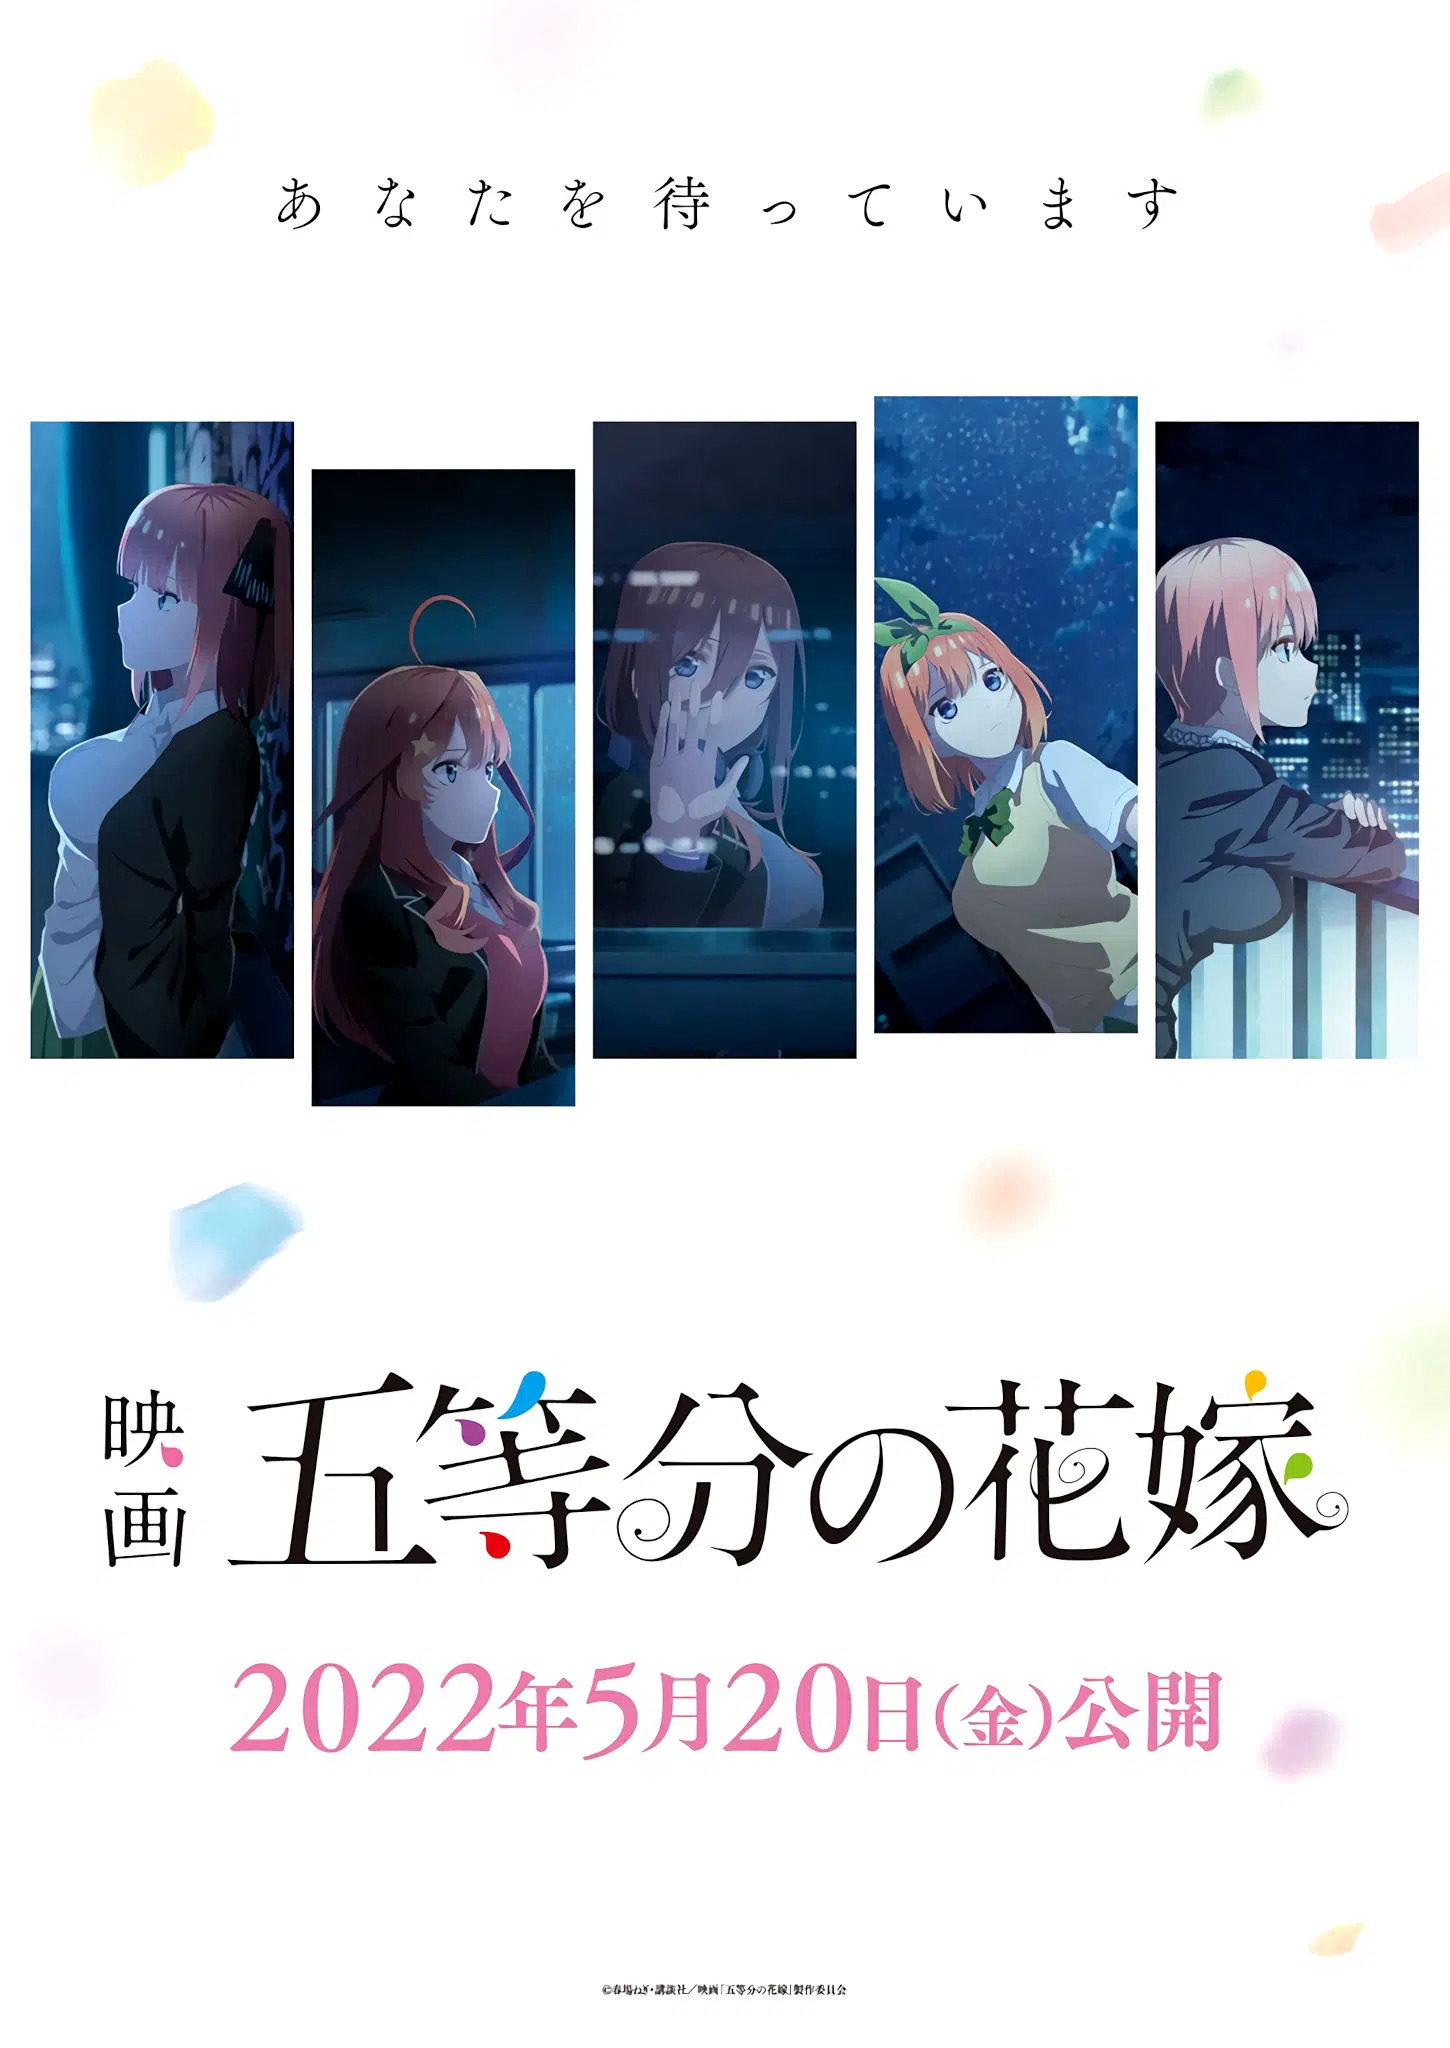 Mega Sized TV Poster Image for Go-Toubun no Hanayome 